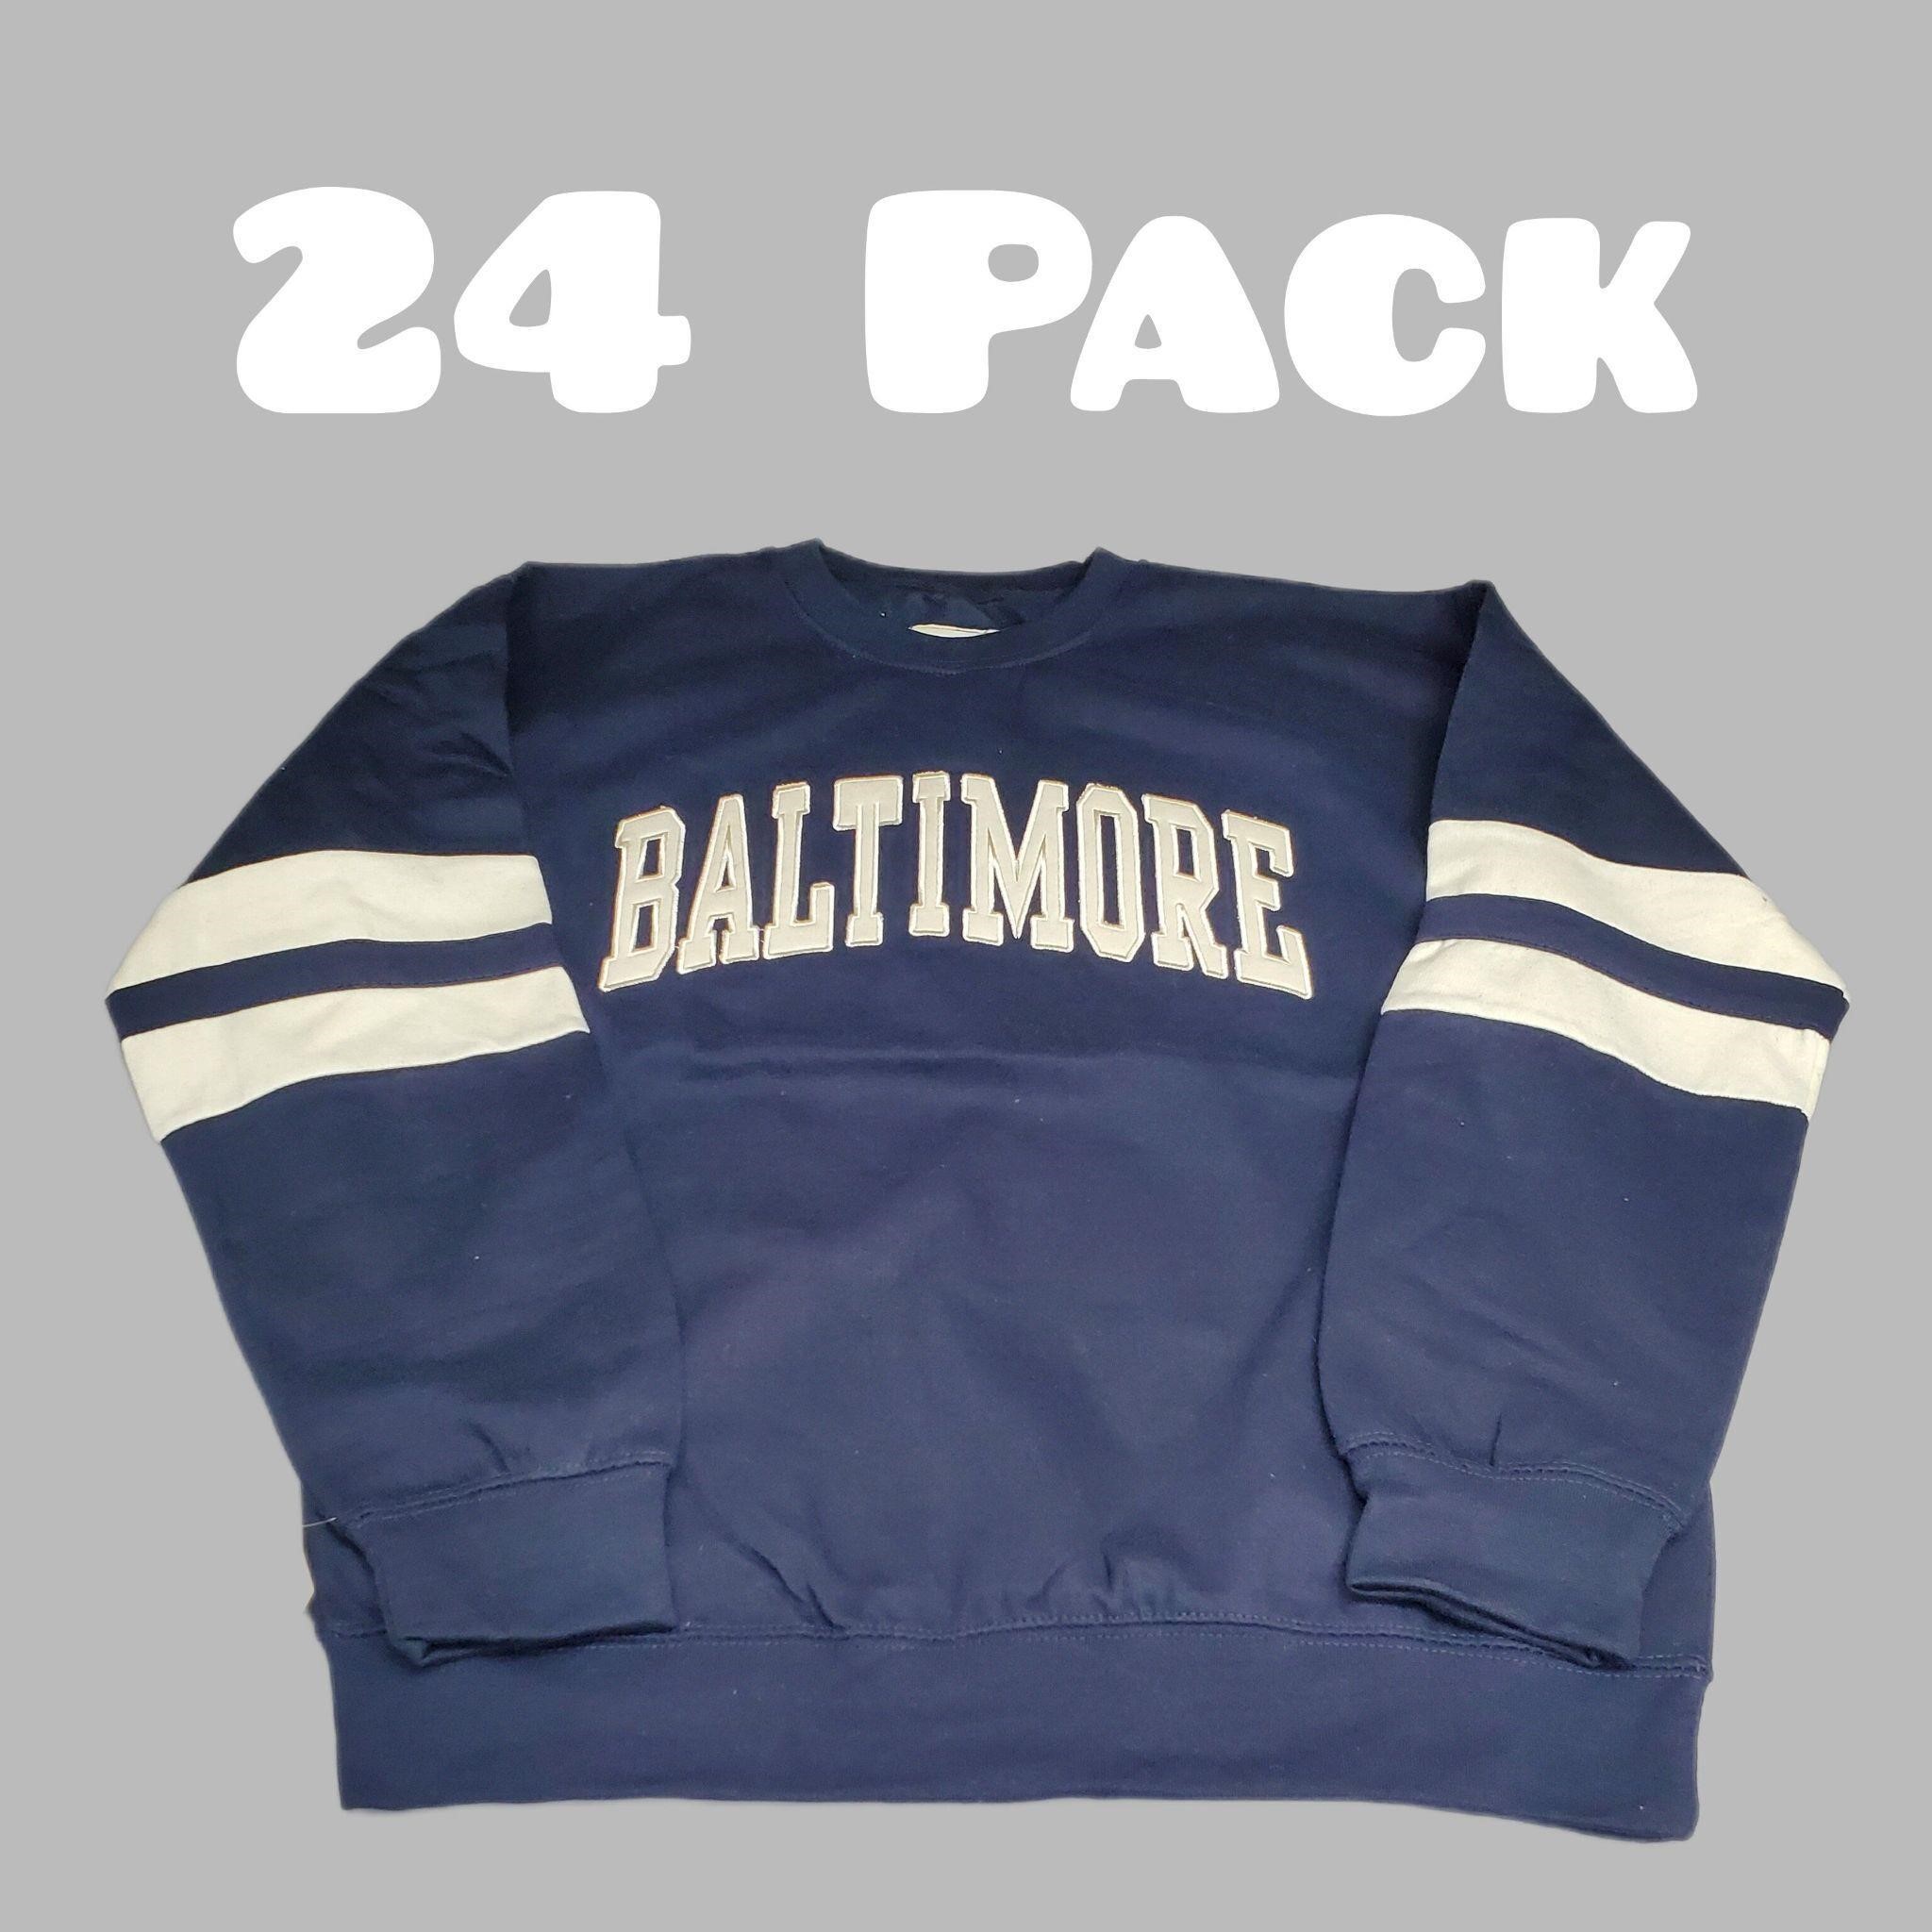 24-PK! SZ M Baltimore Sweatshirt NEW YORK POPULAR